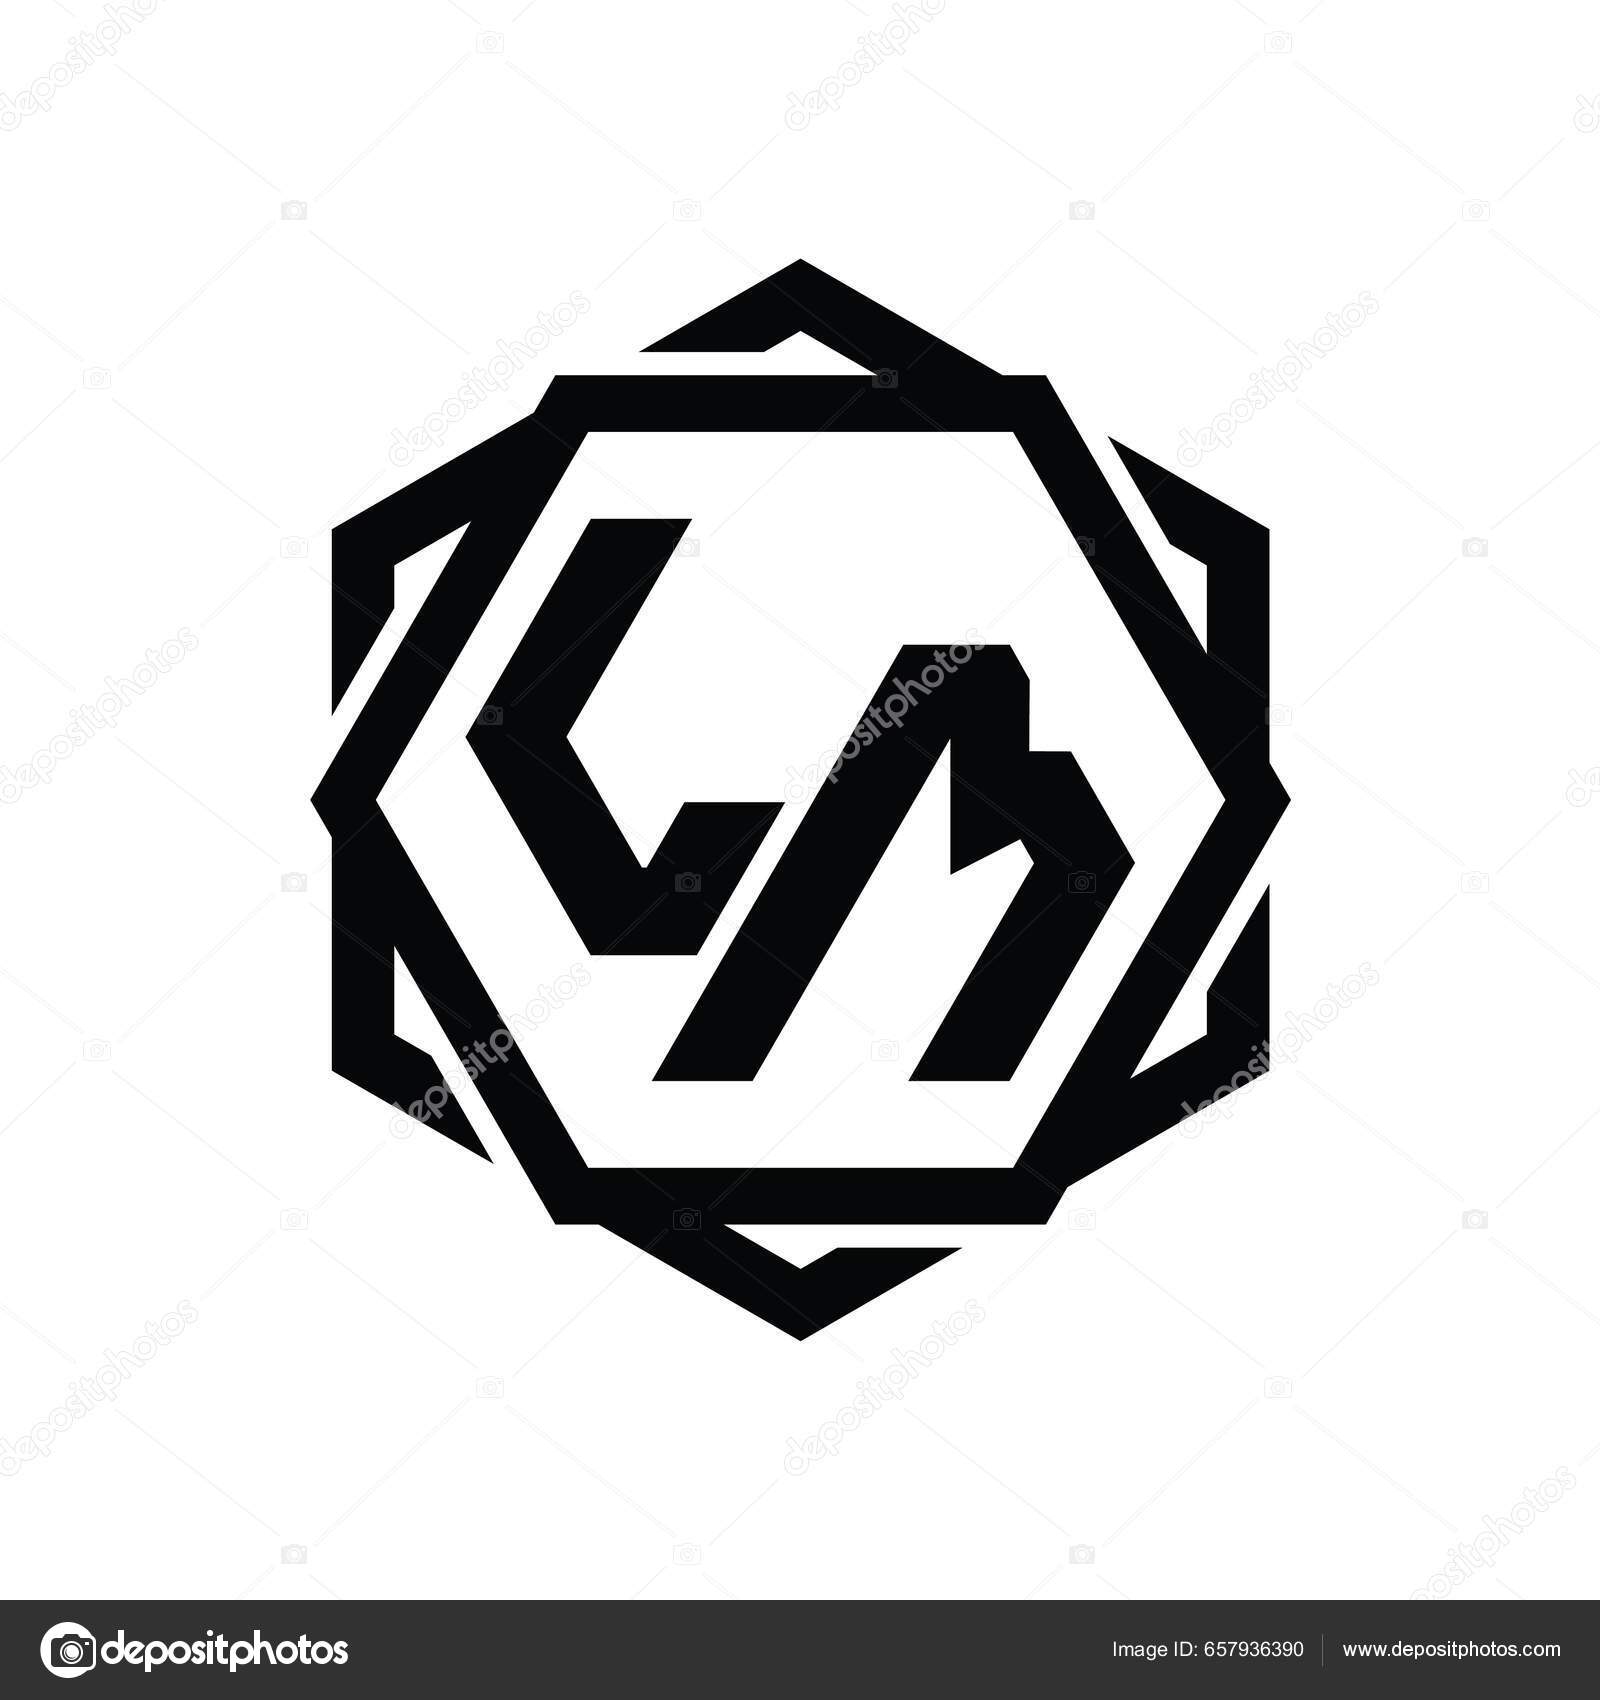 PM Logo monogram gaming with hexagon geometric shape design